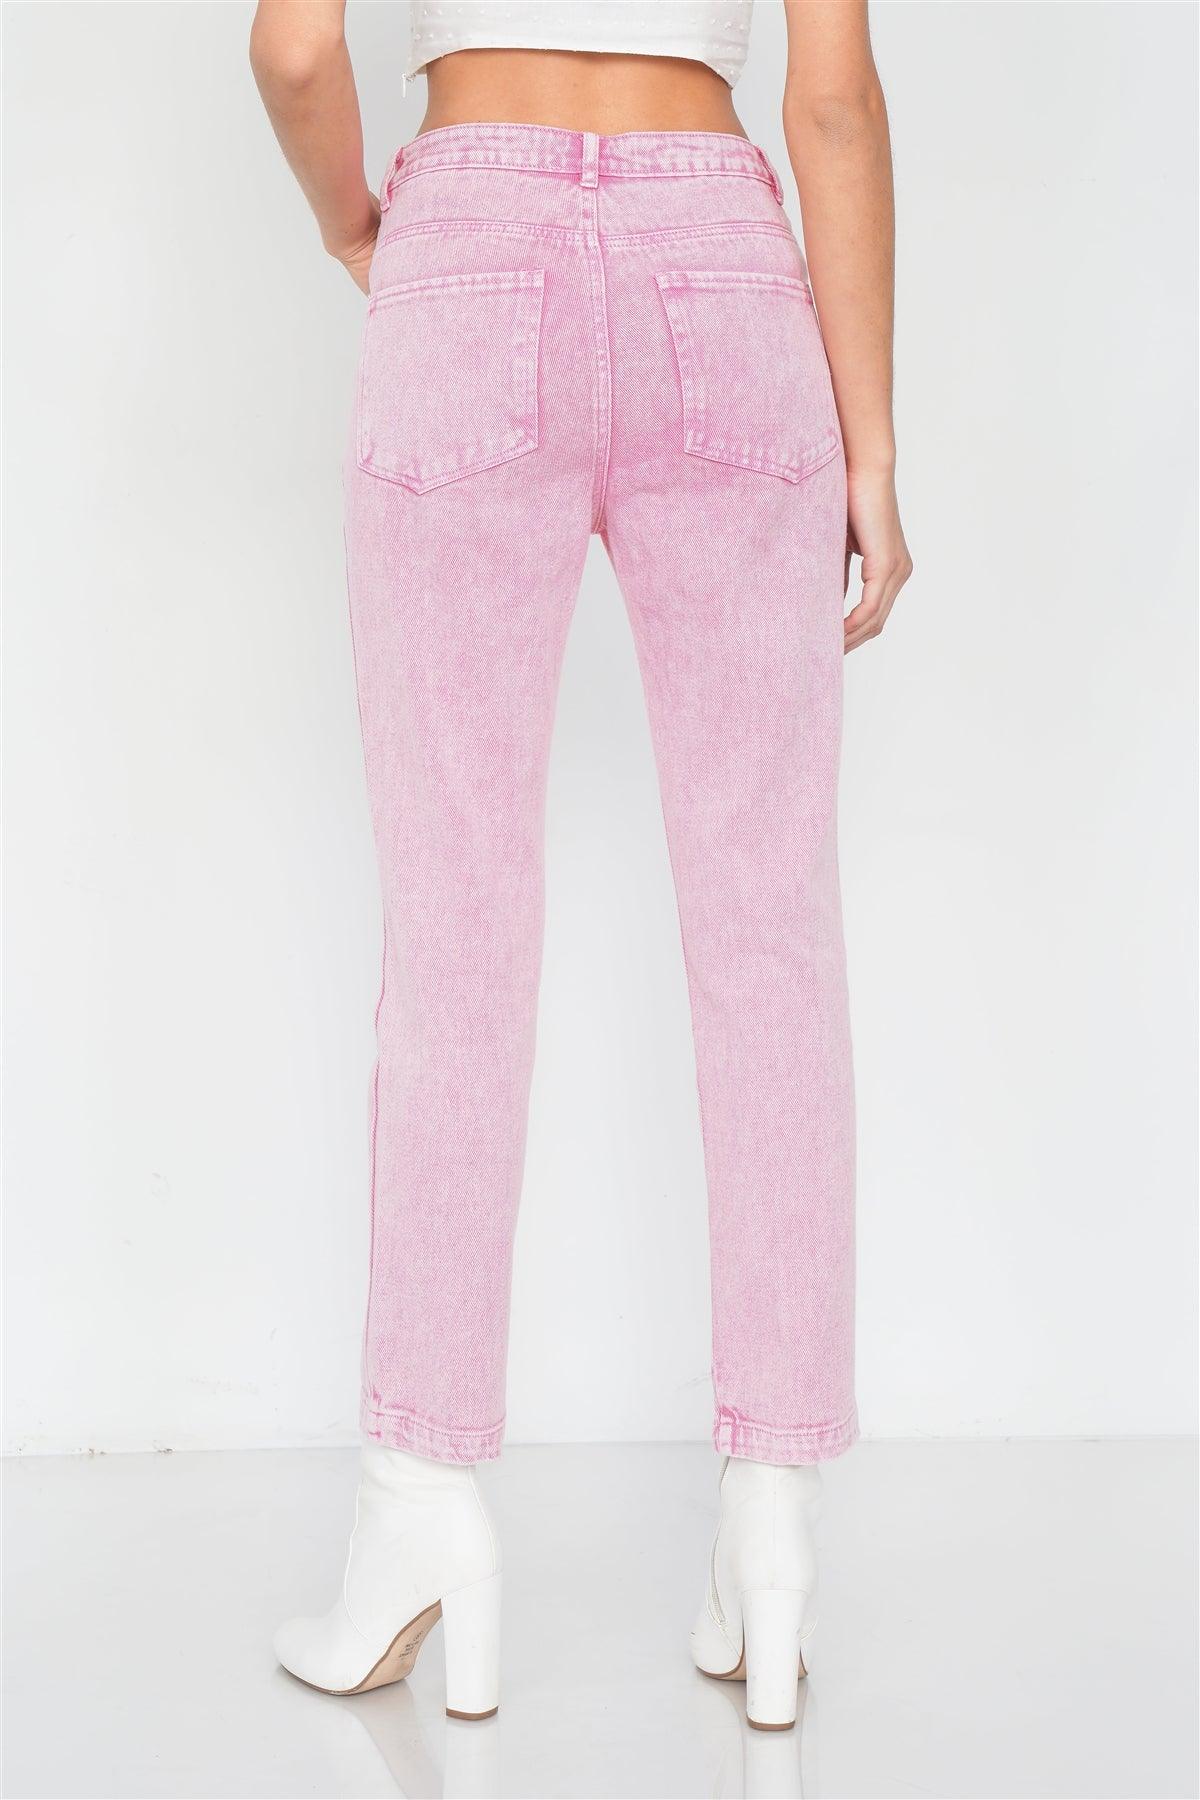 Pink Cotton Denim Acid Washed Boot Cut Jeans  /3-2-1